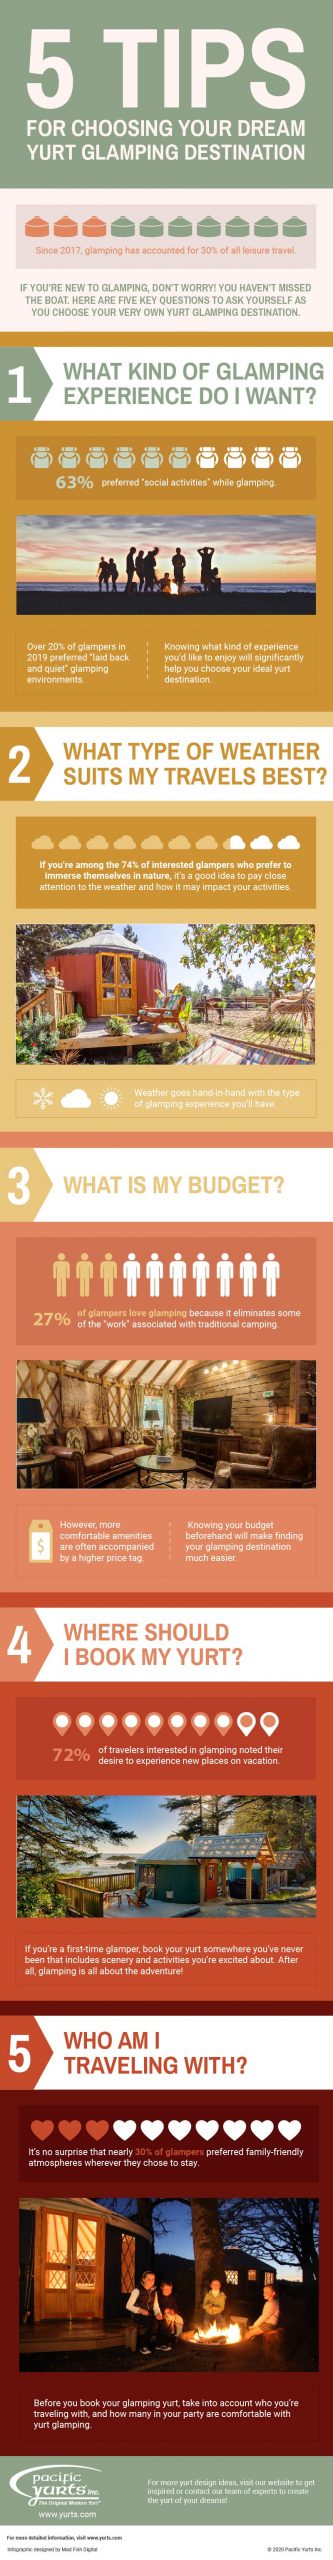 tips for choosing your yurt glamping